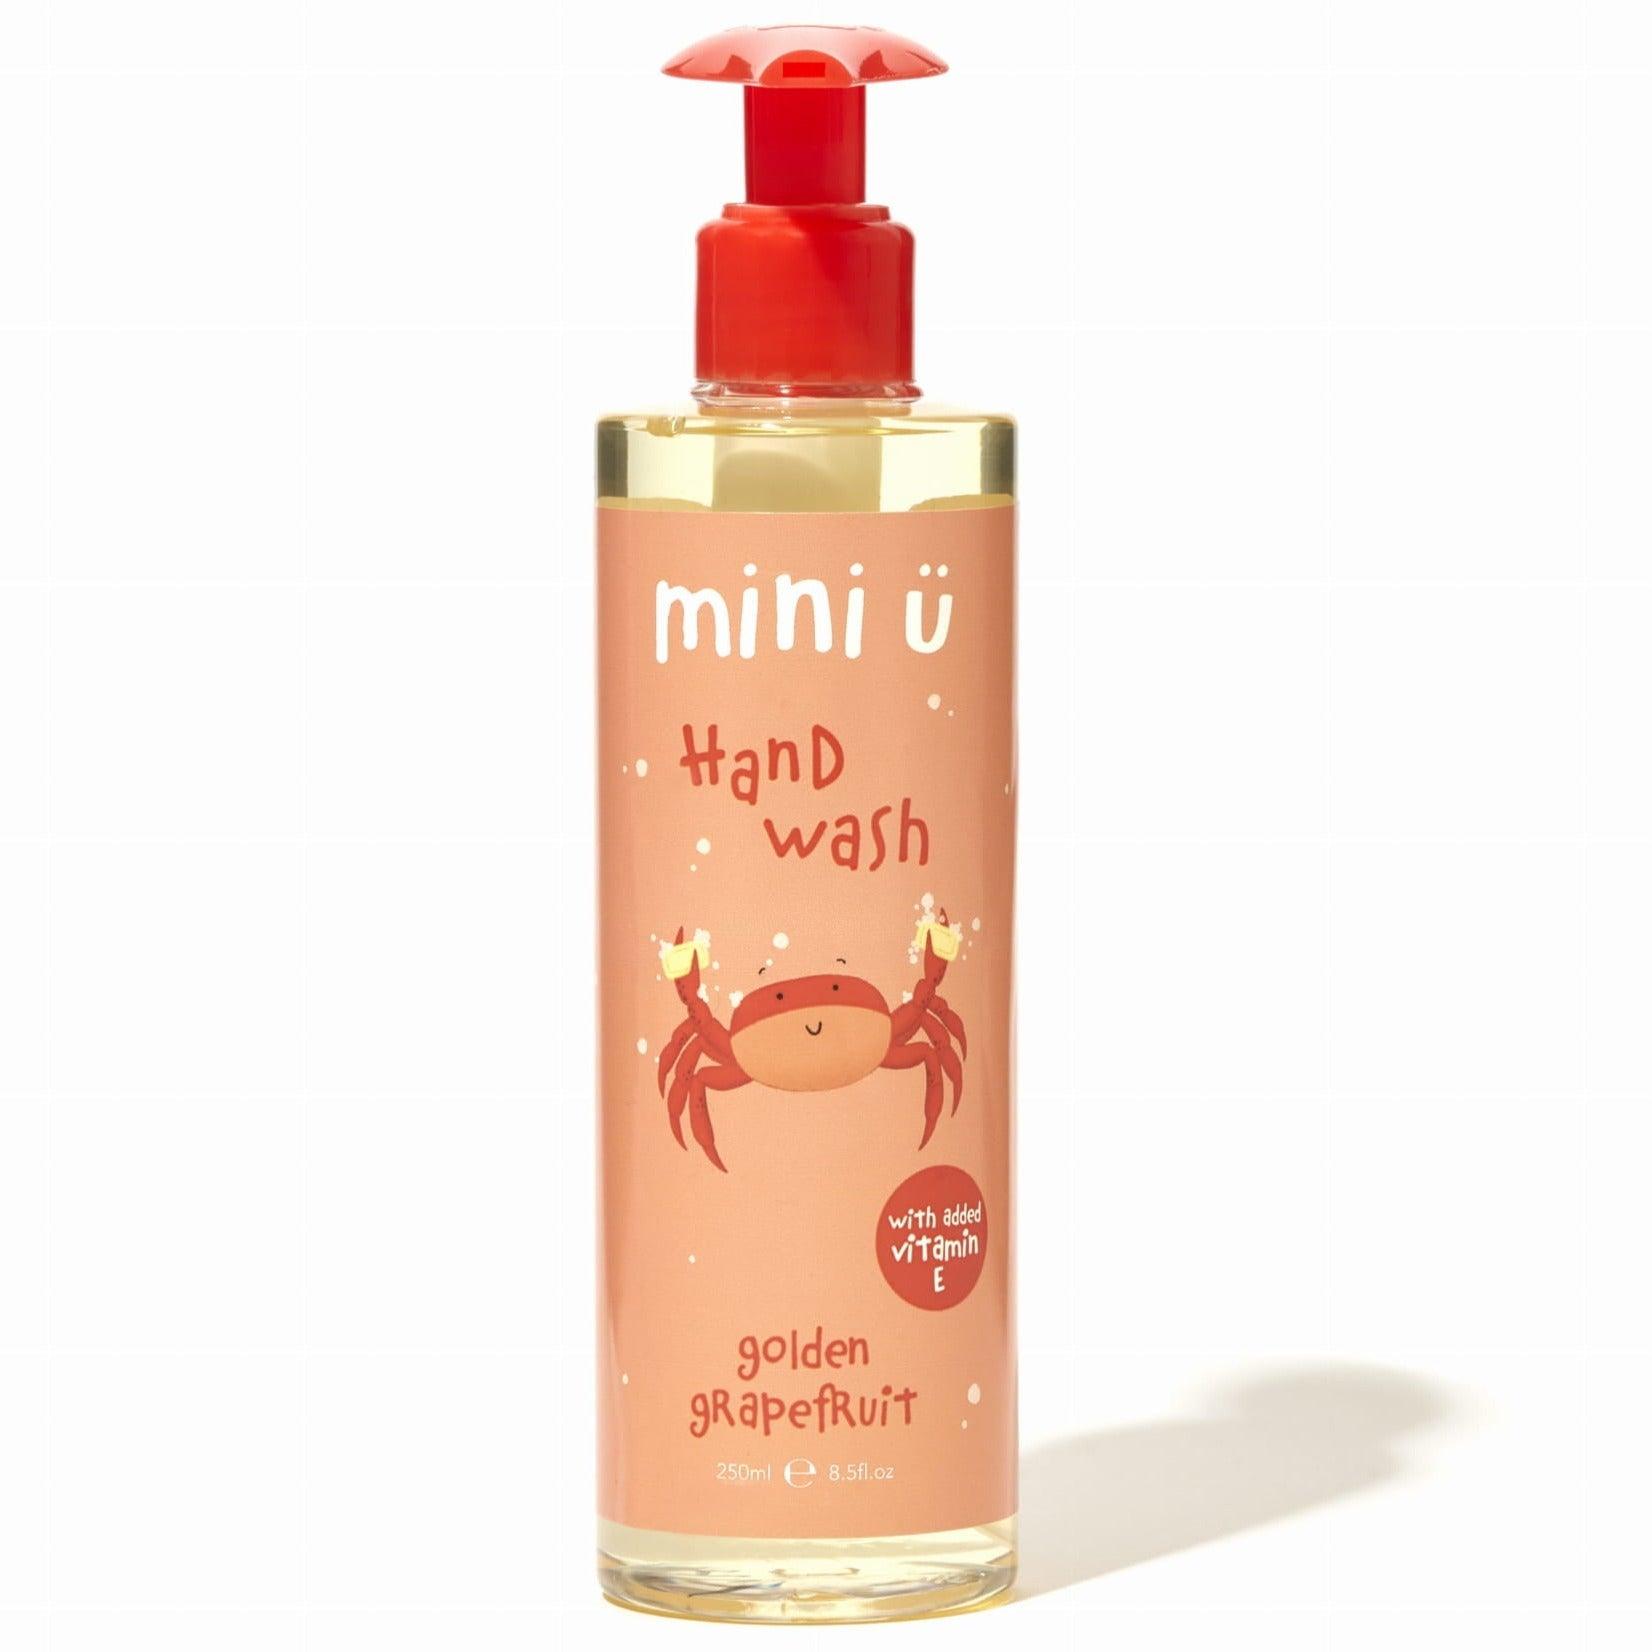 Mini-U: Golden Grapefruit natural hand soap